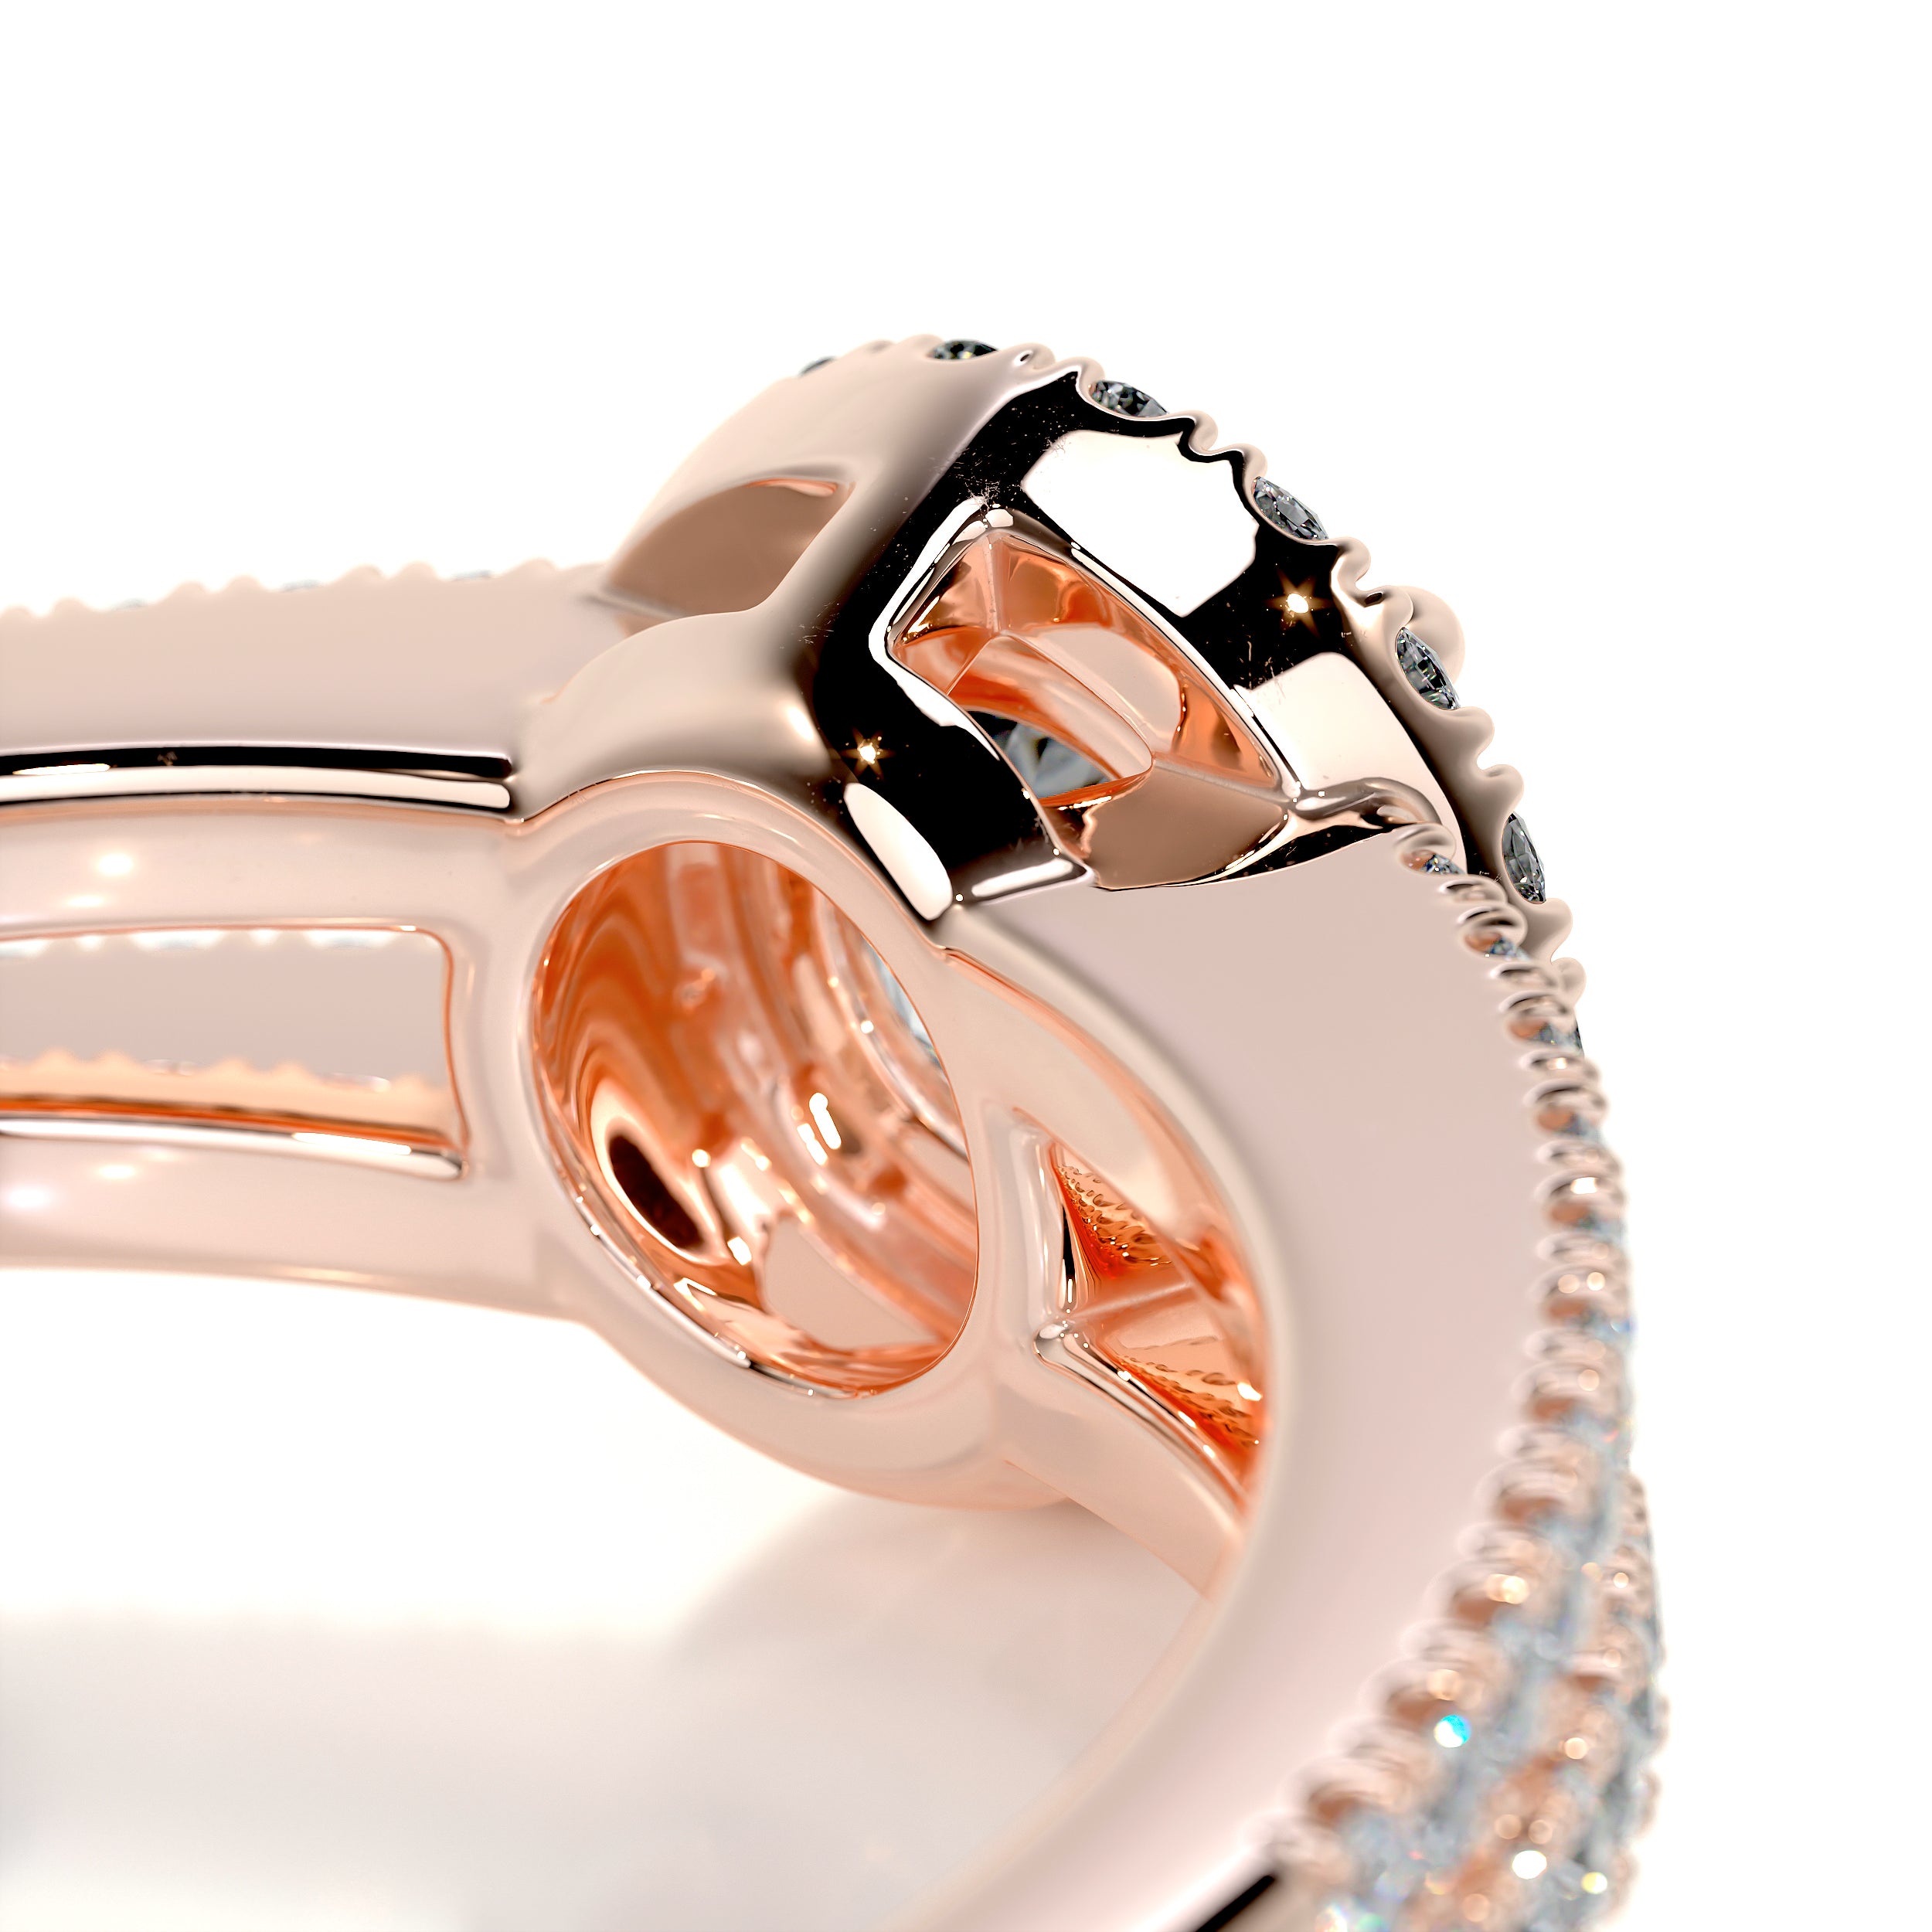 Ruby Diamond Engagement Ring -14K Rose Gold